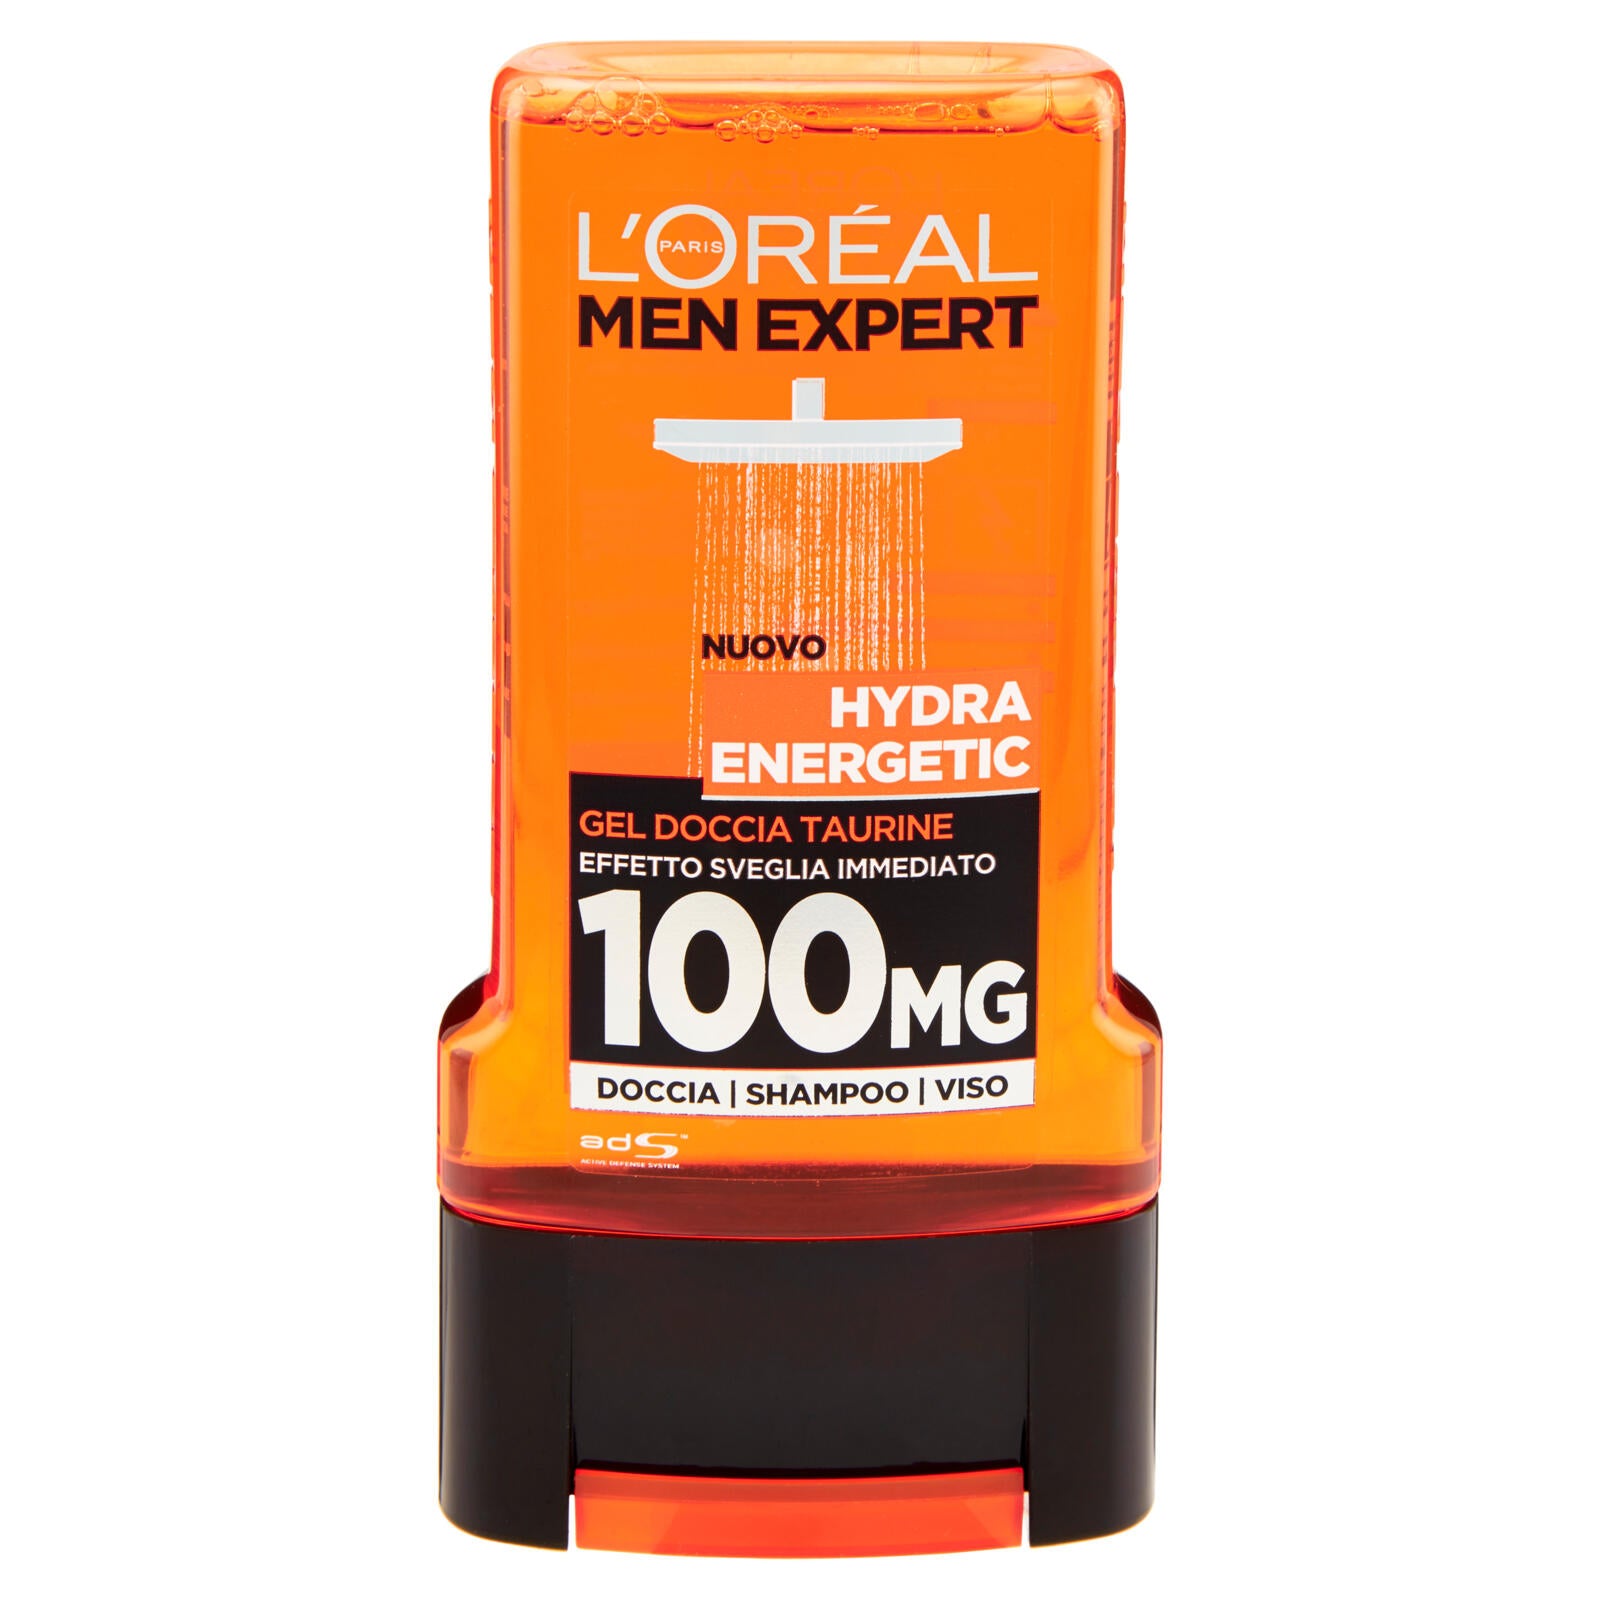 L'Oréal Paris Men Expert Hydra Energetic Gel Doccia Taurine Effetto Sveglia Immediato 100 MG 300 ml